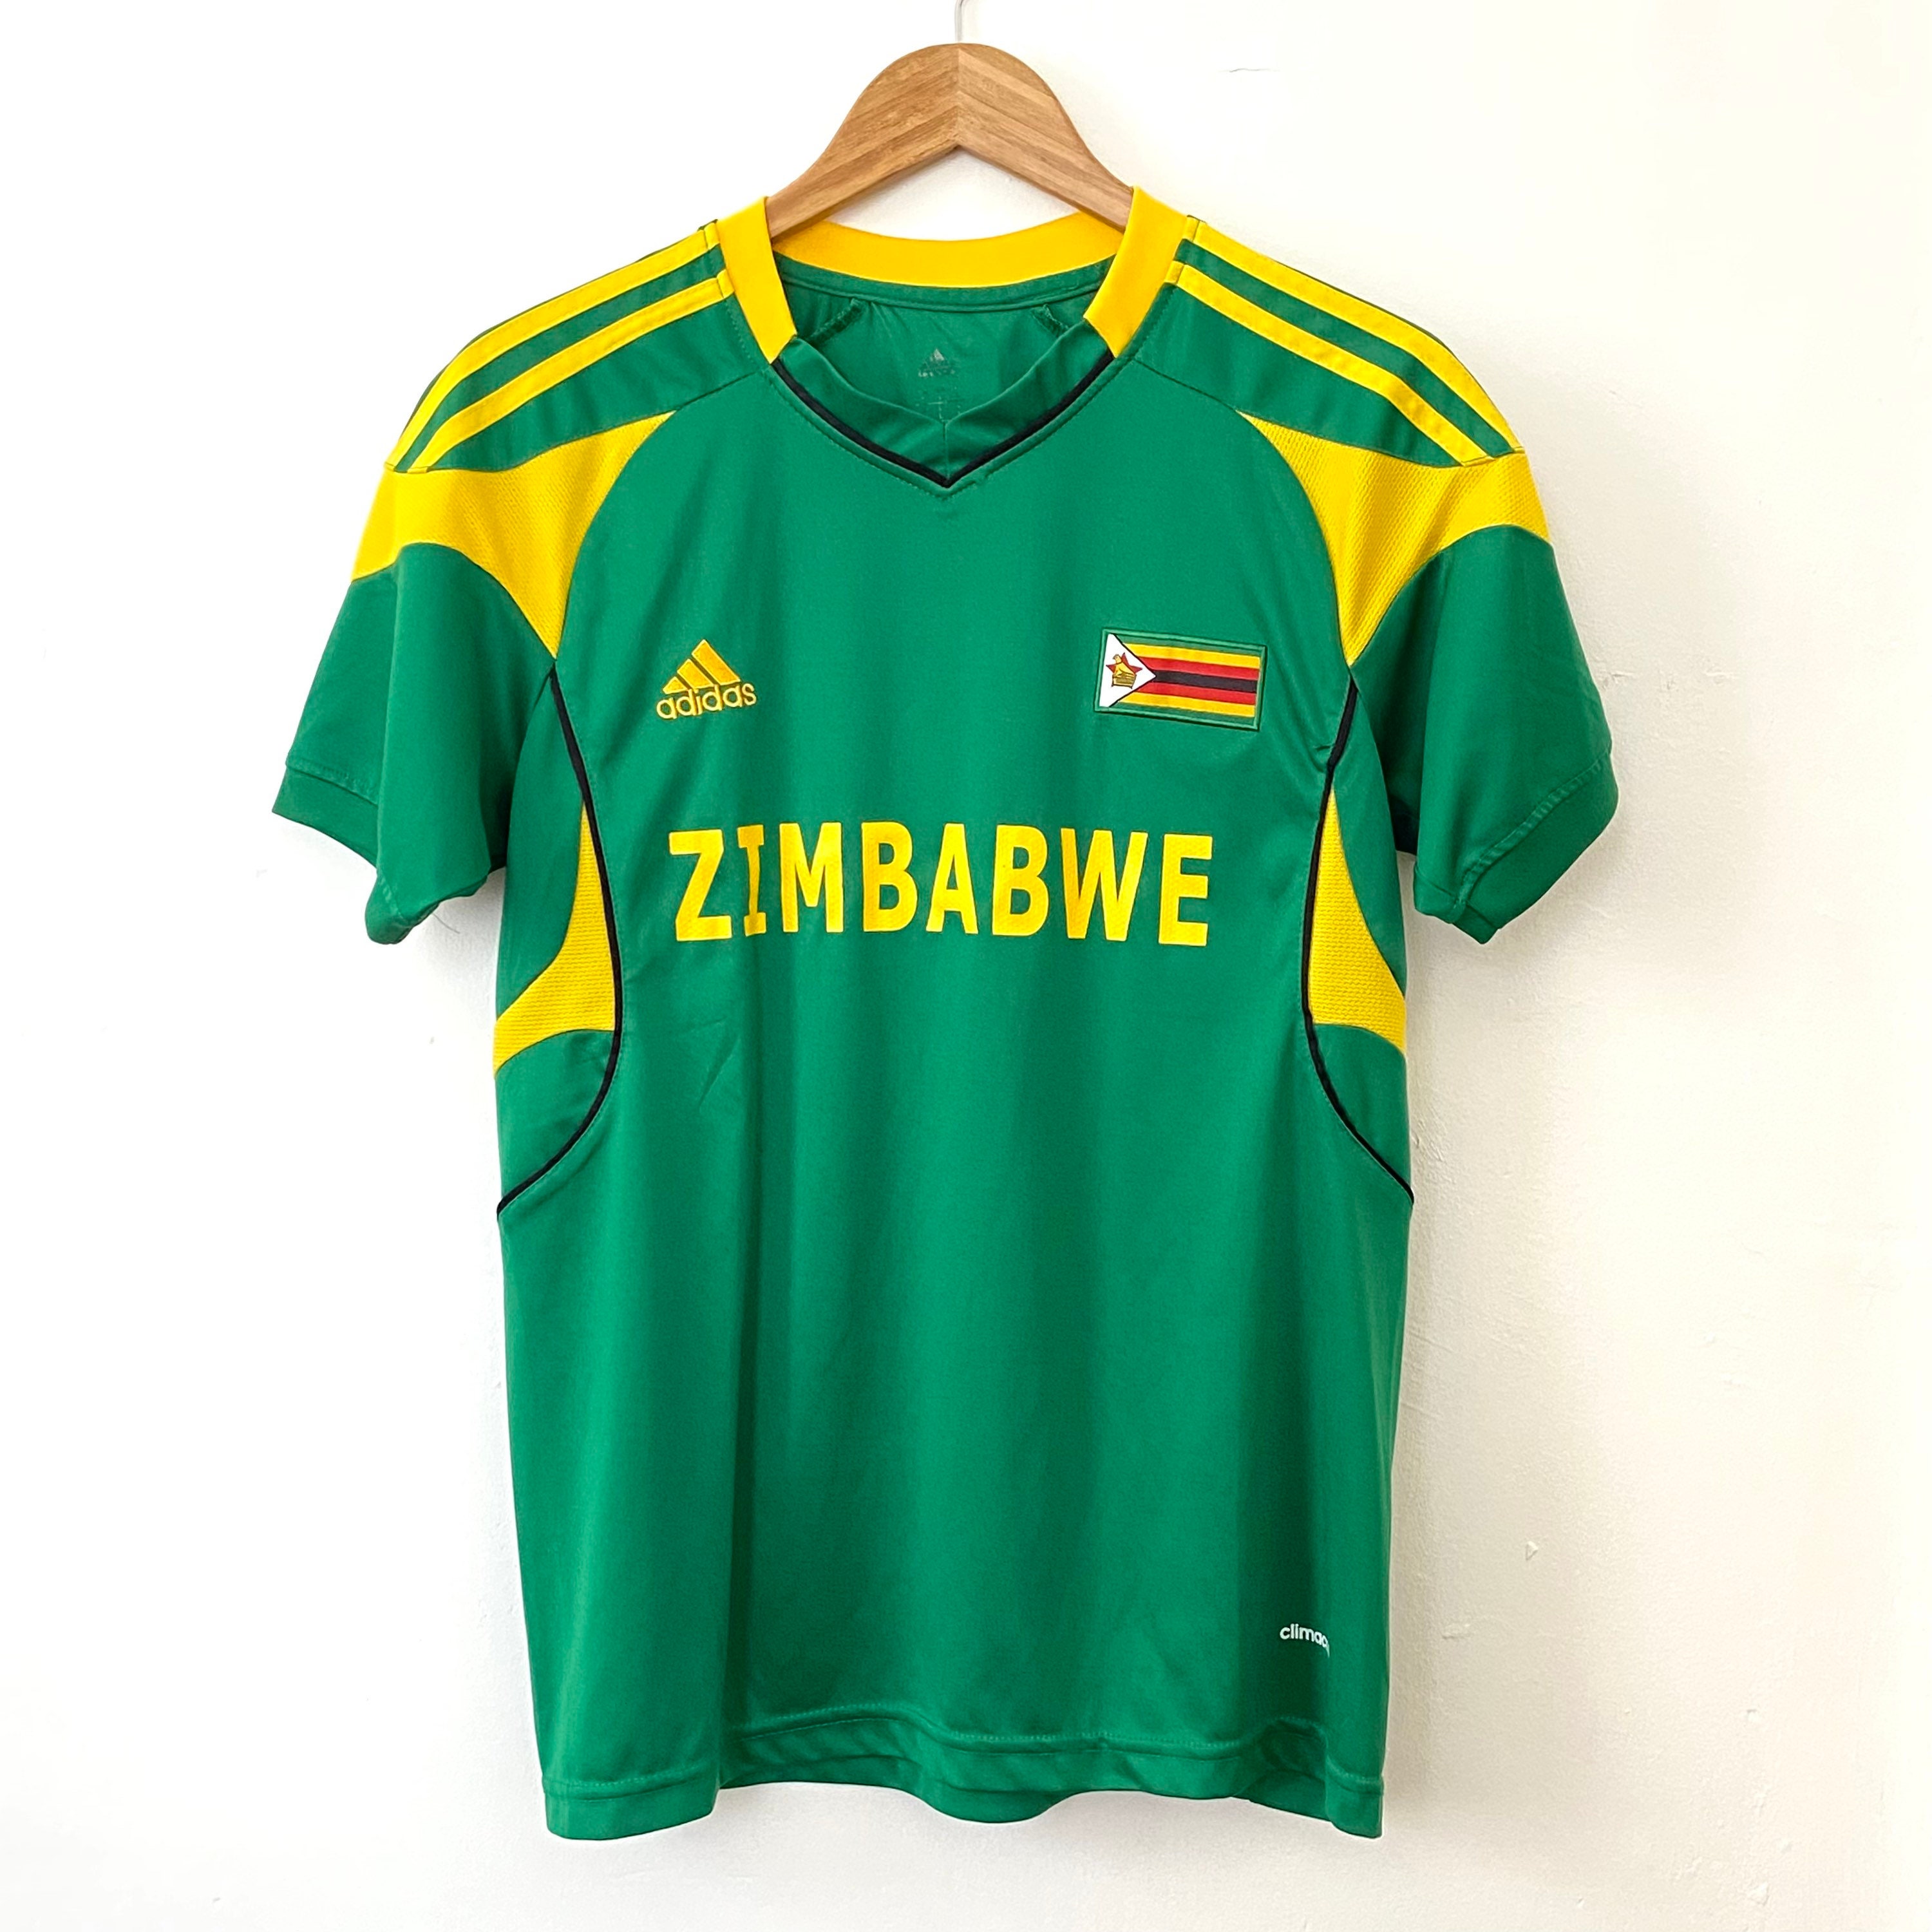 Adidas shirt soccer Jersey Kenya climacool size S